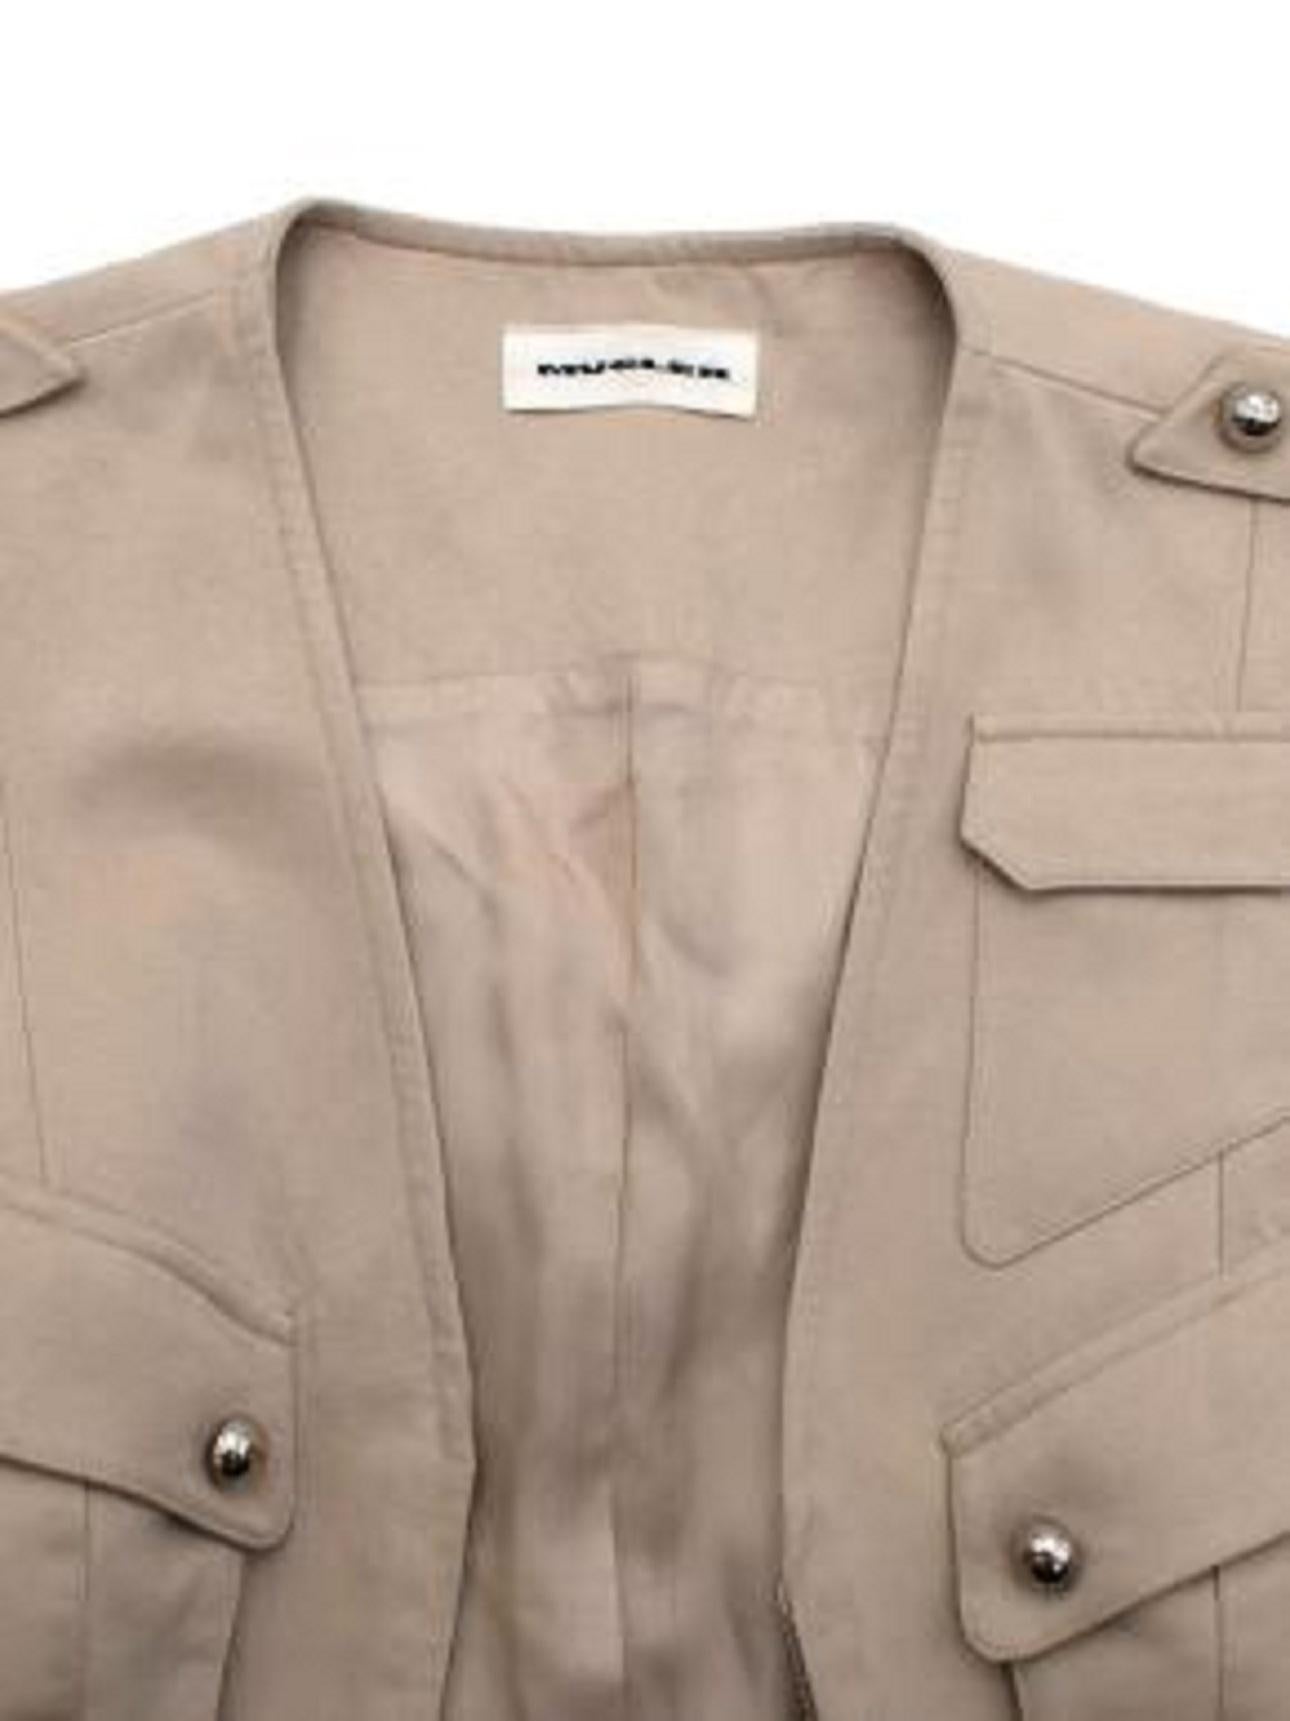 safari jacket short sleeve